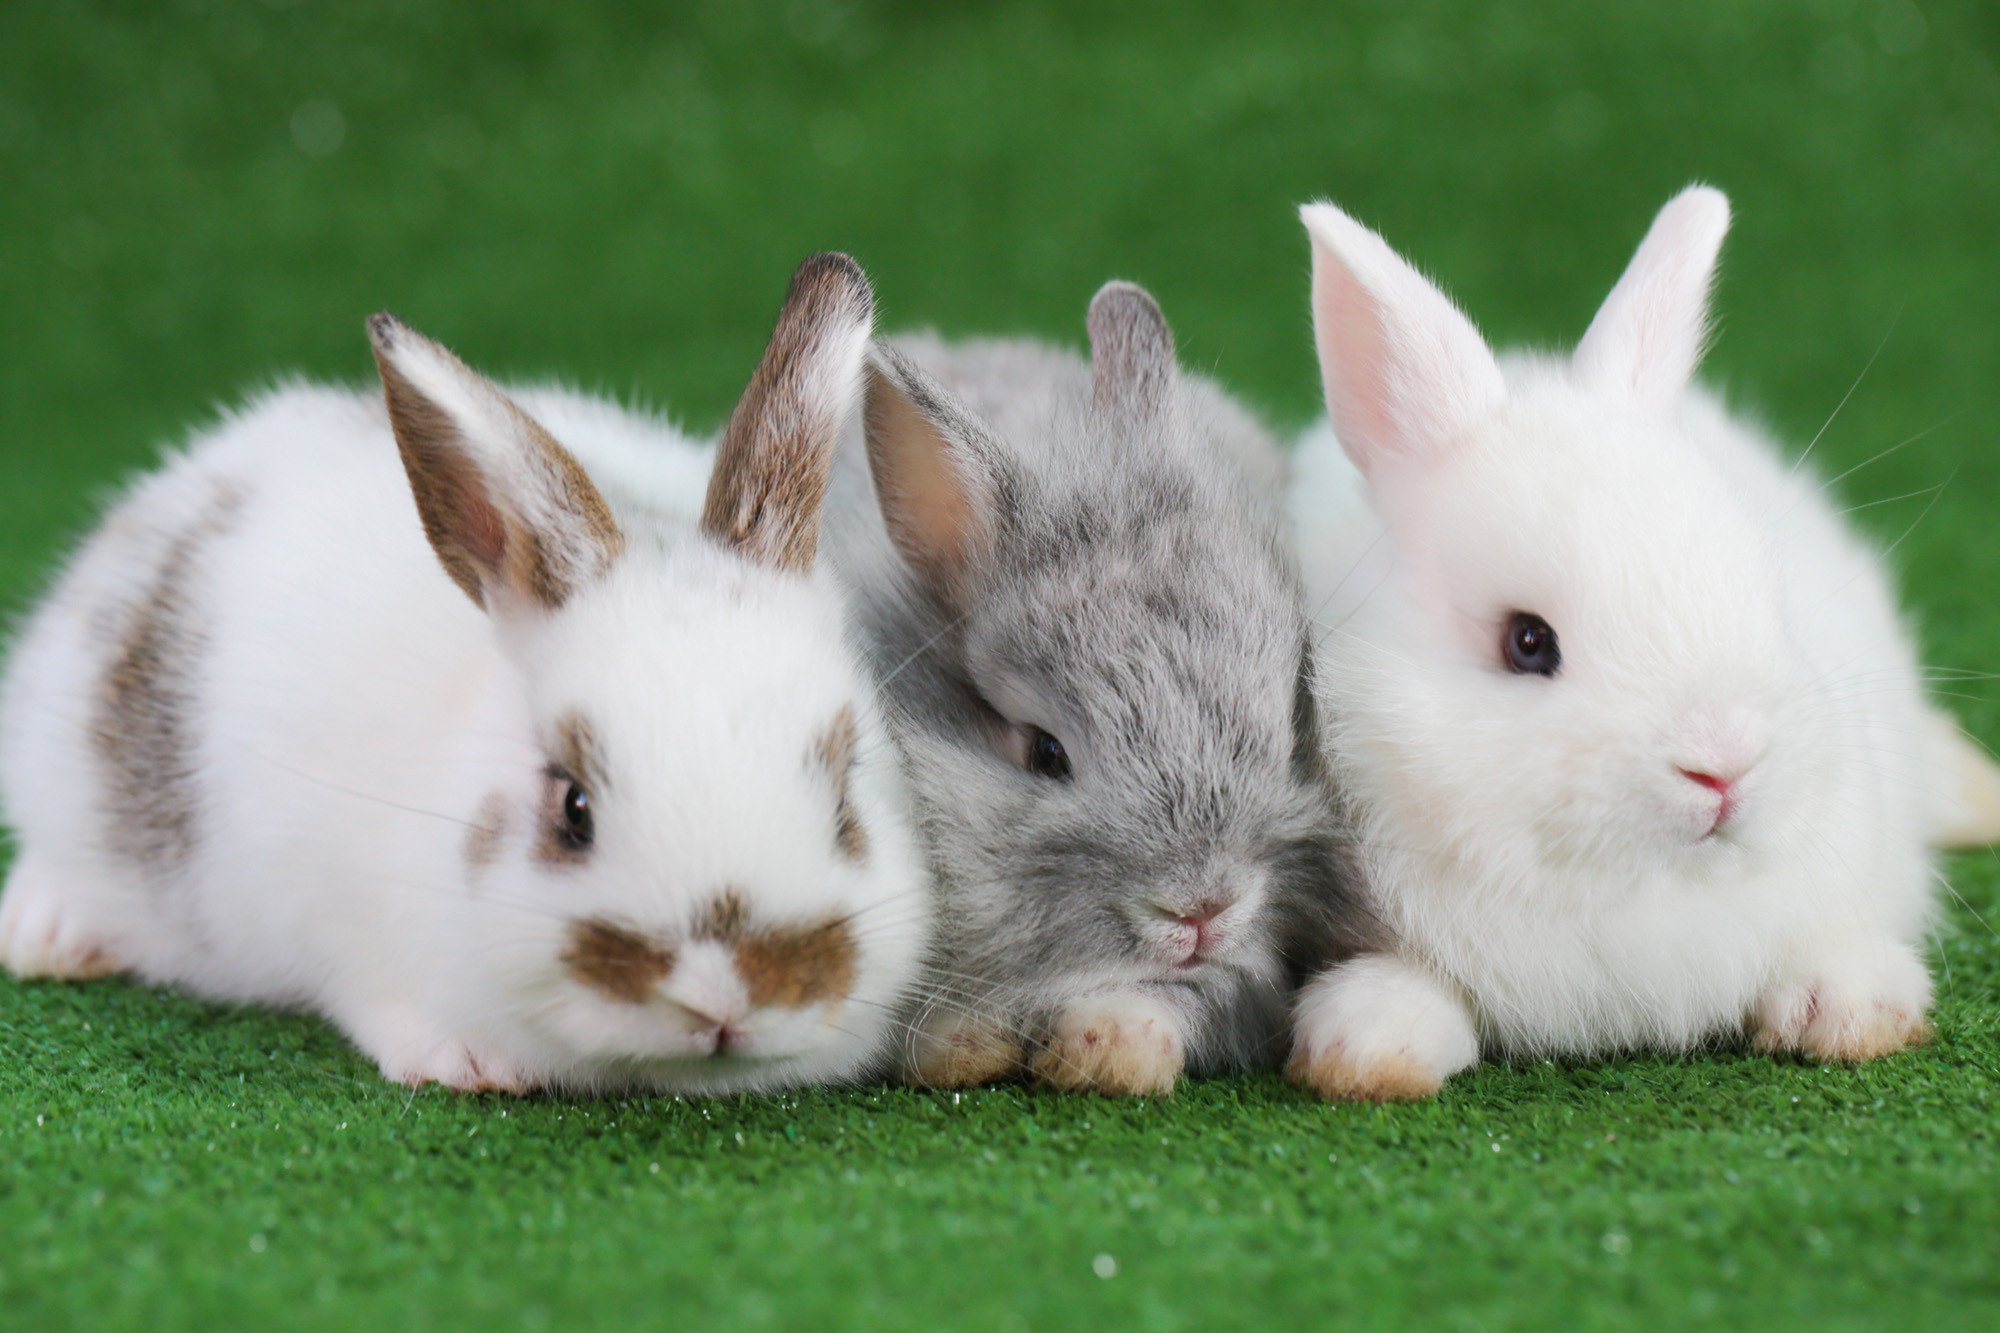 Poland tells shrinking population to multiply like rabbits